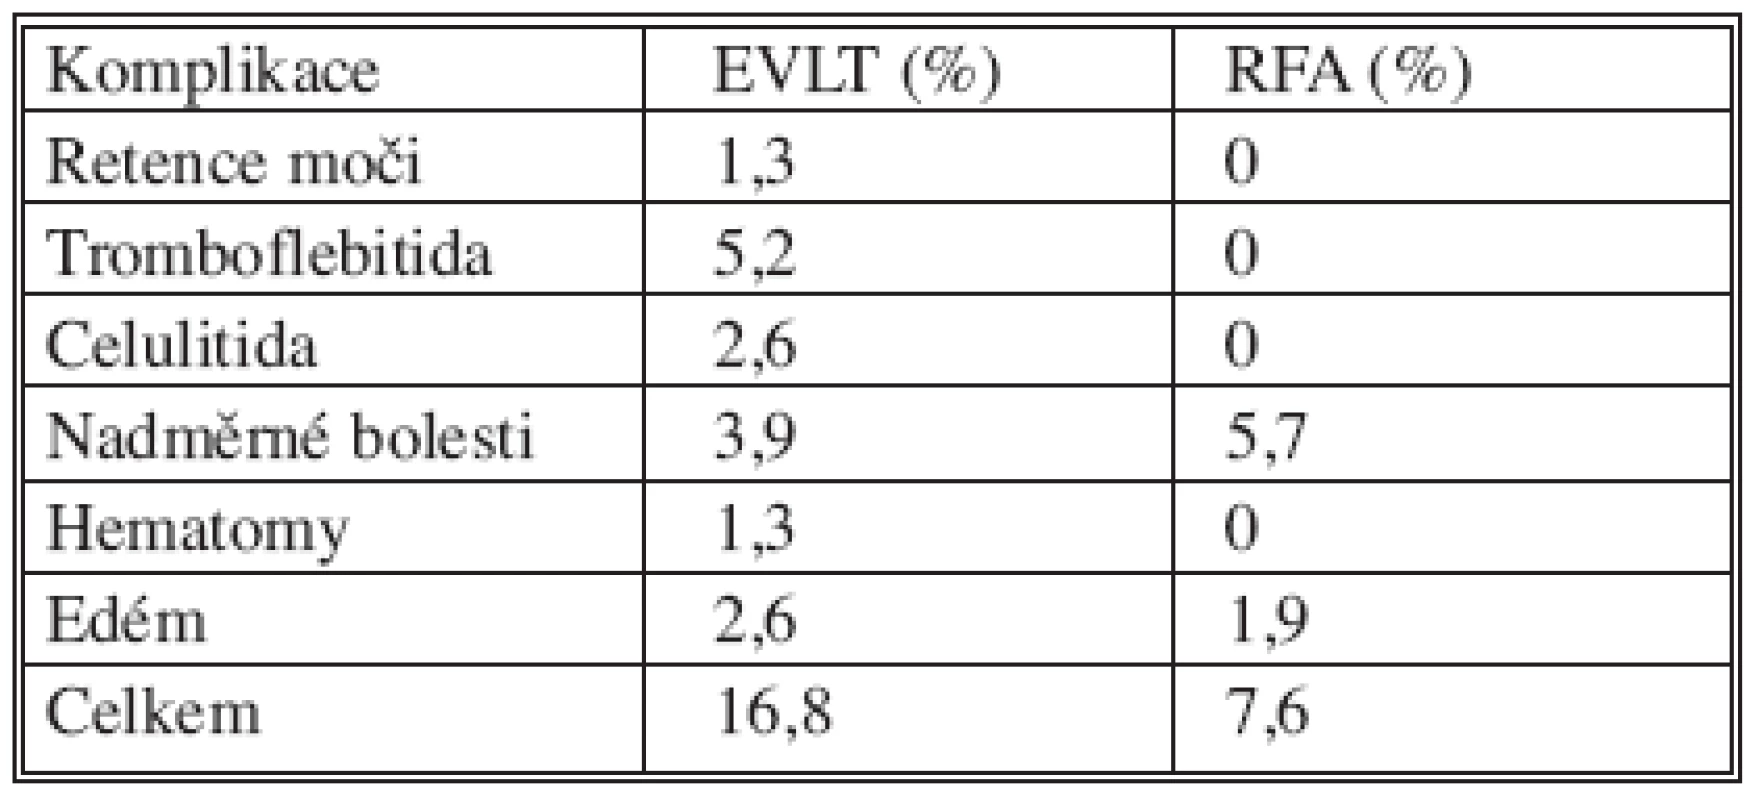 Srovnání komplikací EVLT a RFA [9]
Tab. 2. Comparison of EVLT and RFA complications [9]